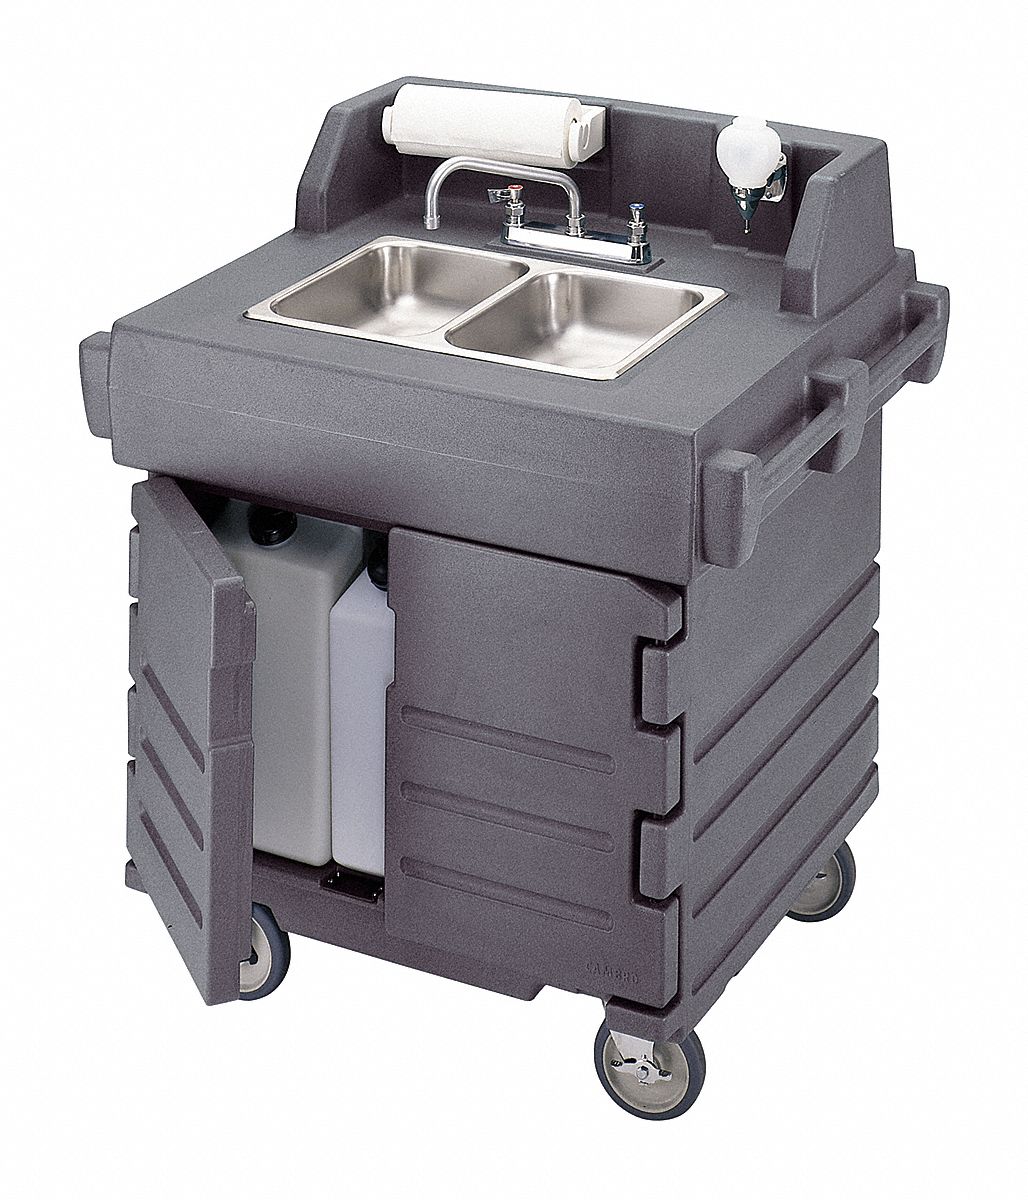 22NV25 - Hand Sink Cart 2 Bowl Polyethylene